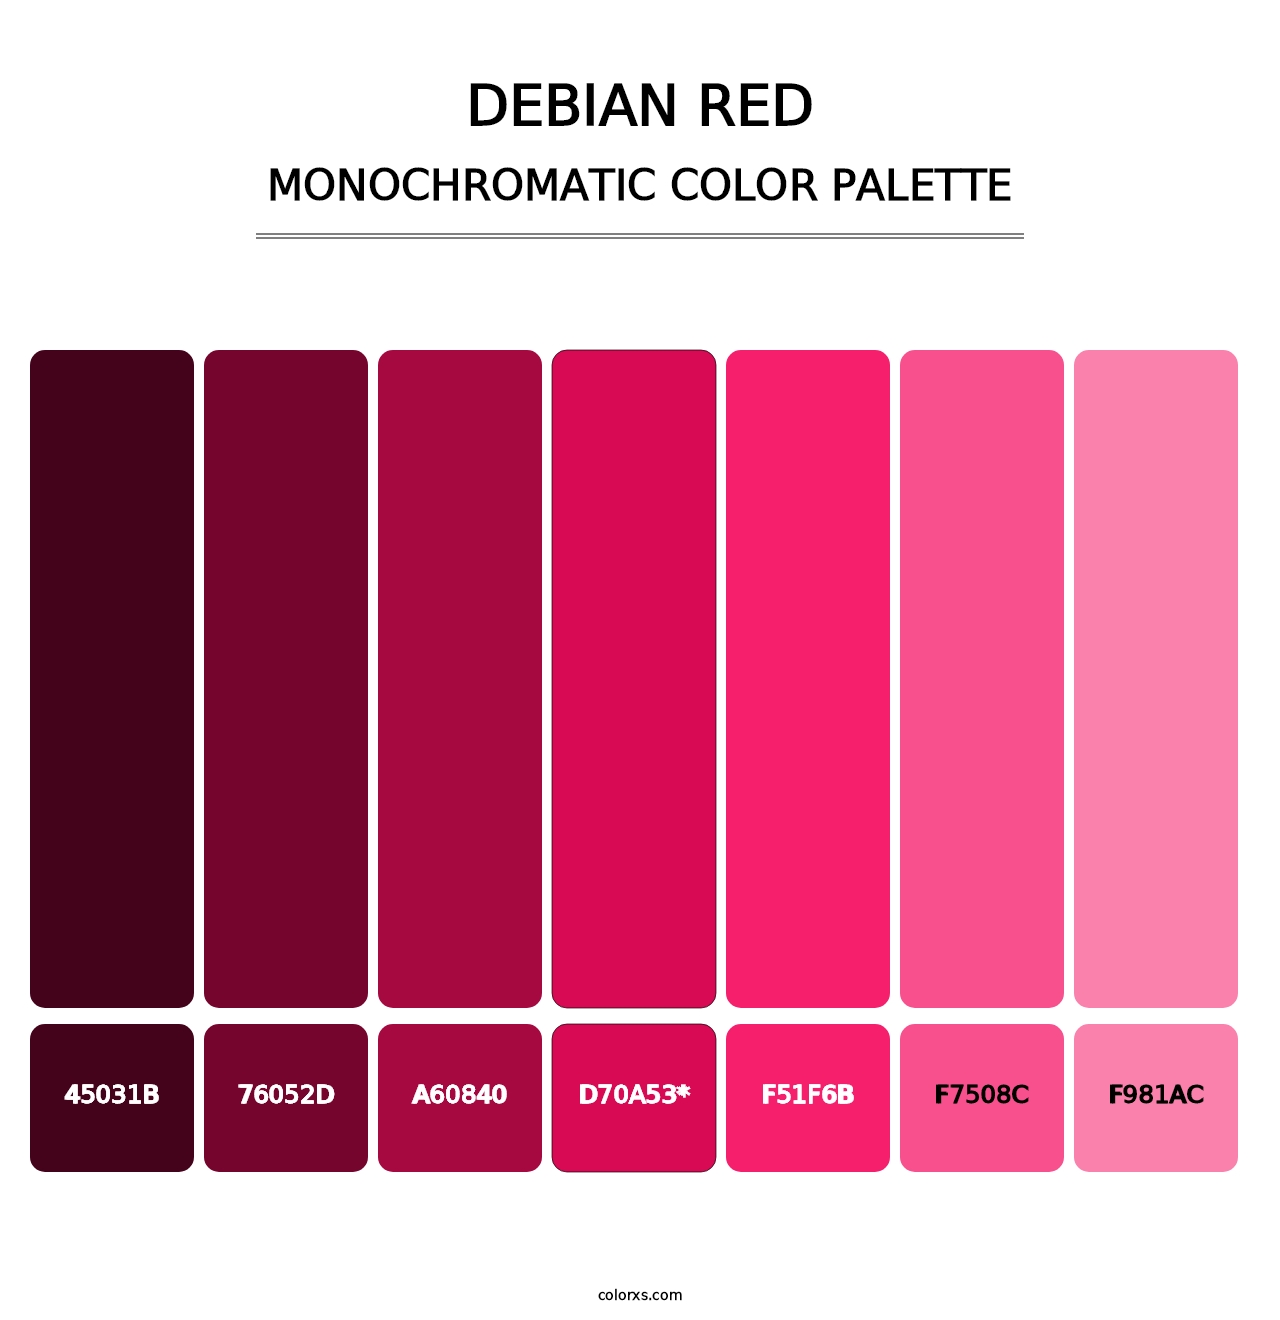 Debian red - Monochromatic Color Palette